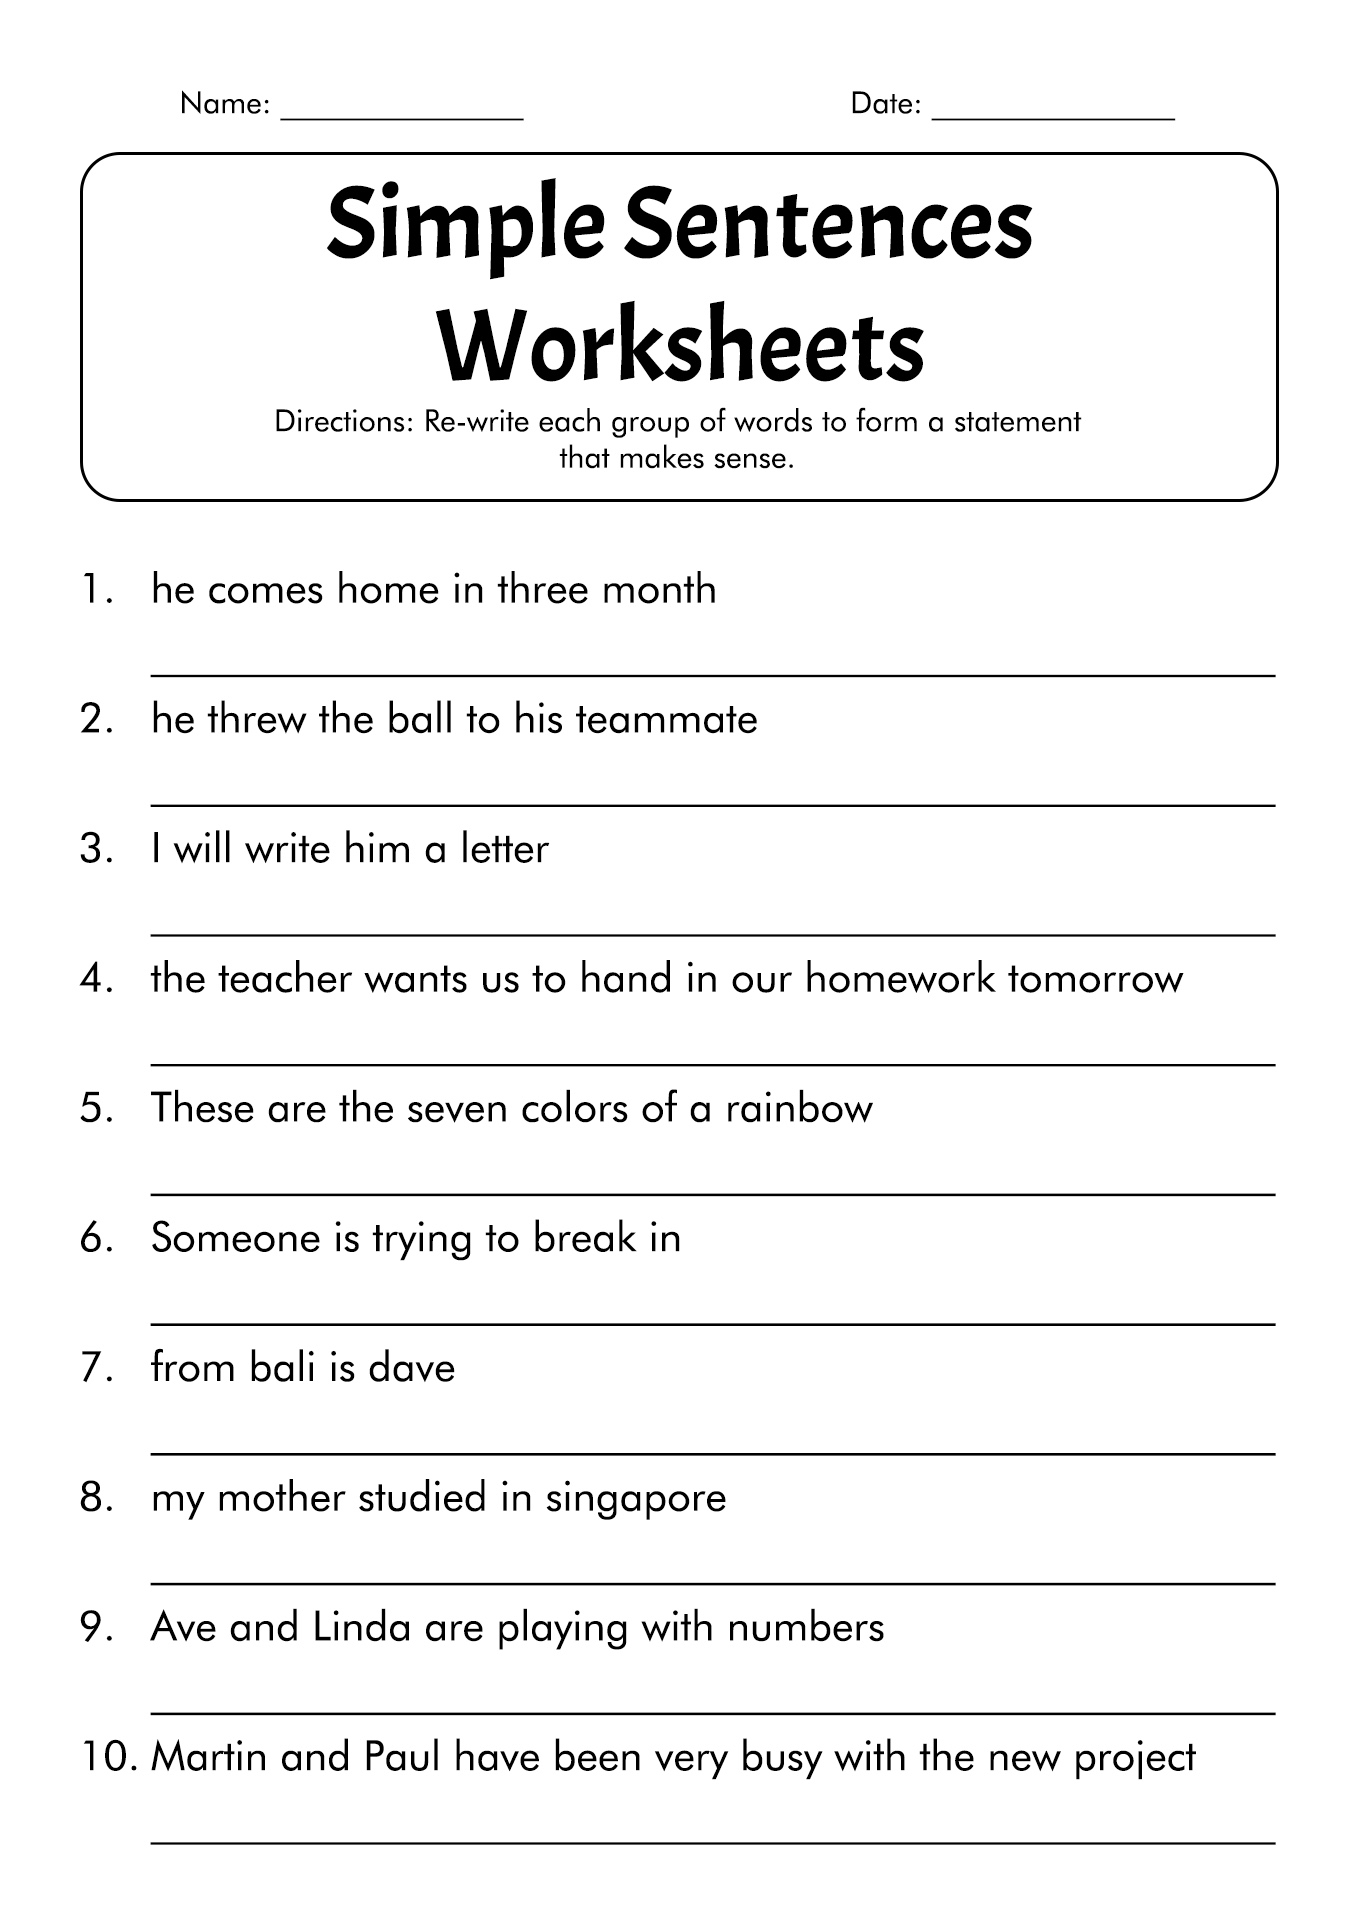 Simple Sentences Worksheets